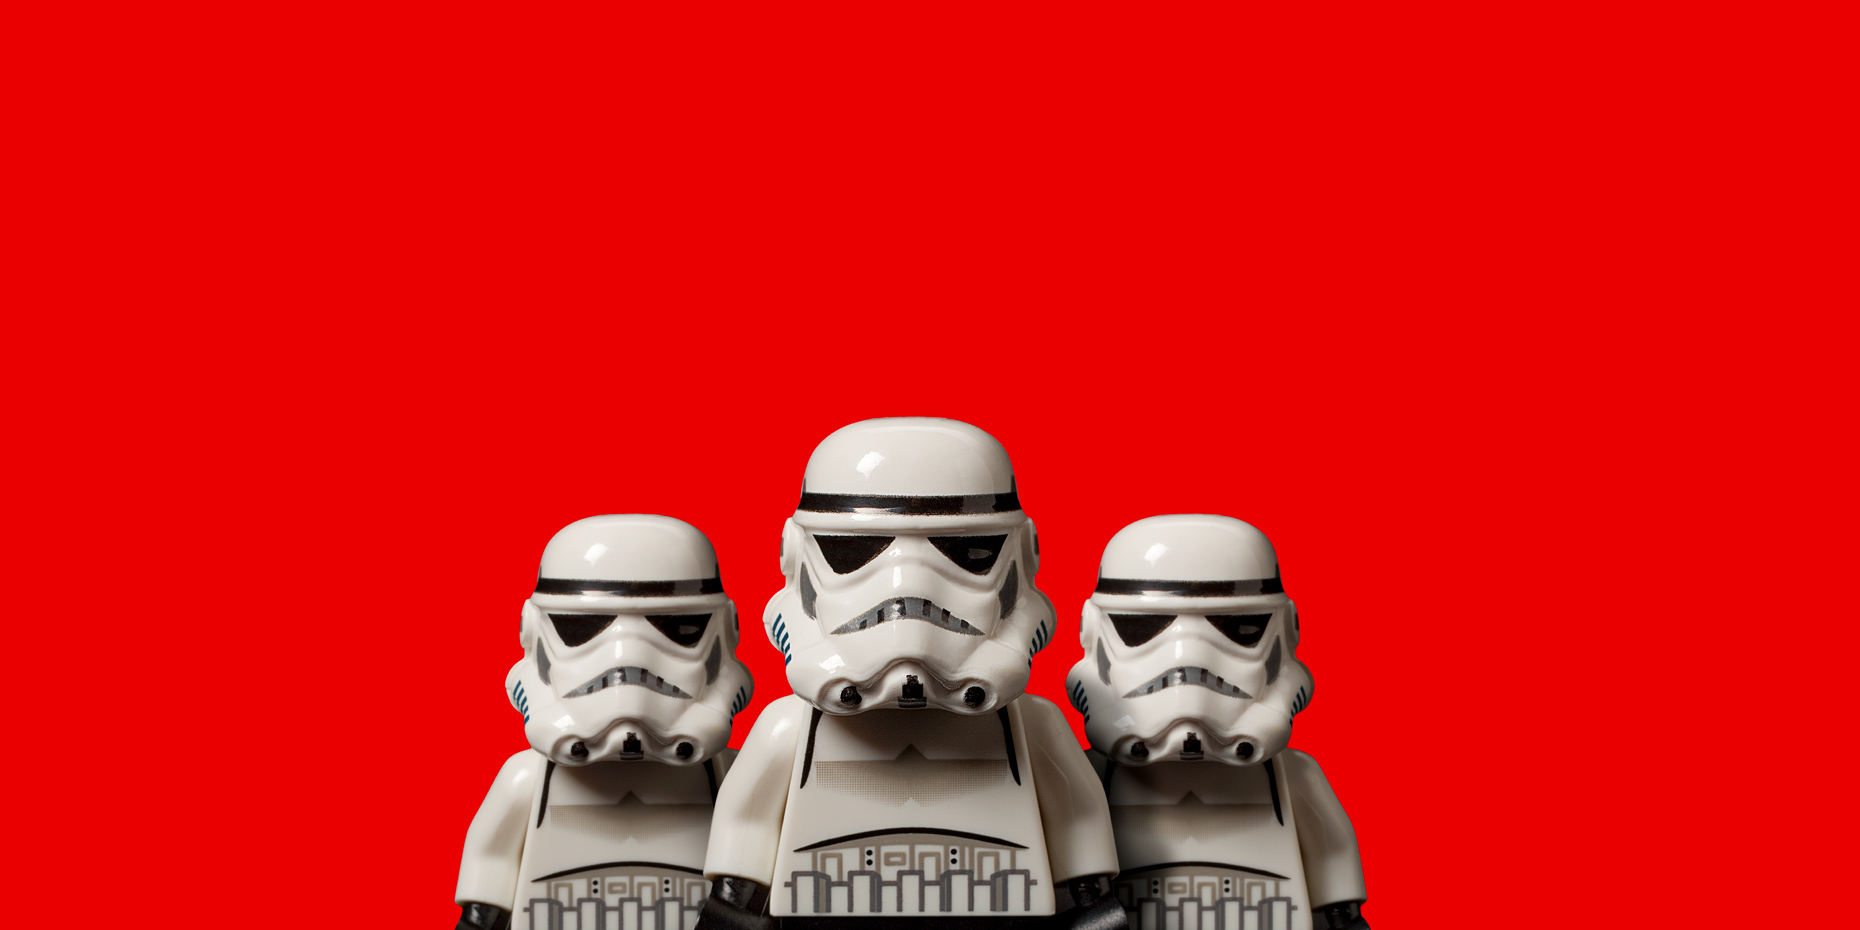 Lego Wars "Storm Troopers"